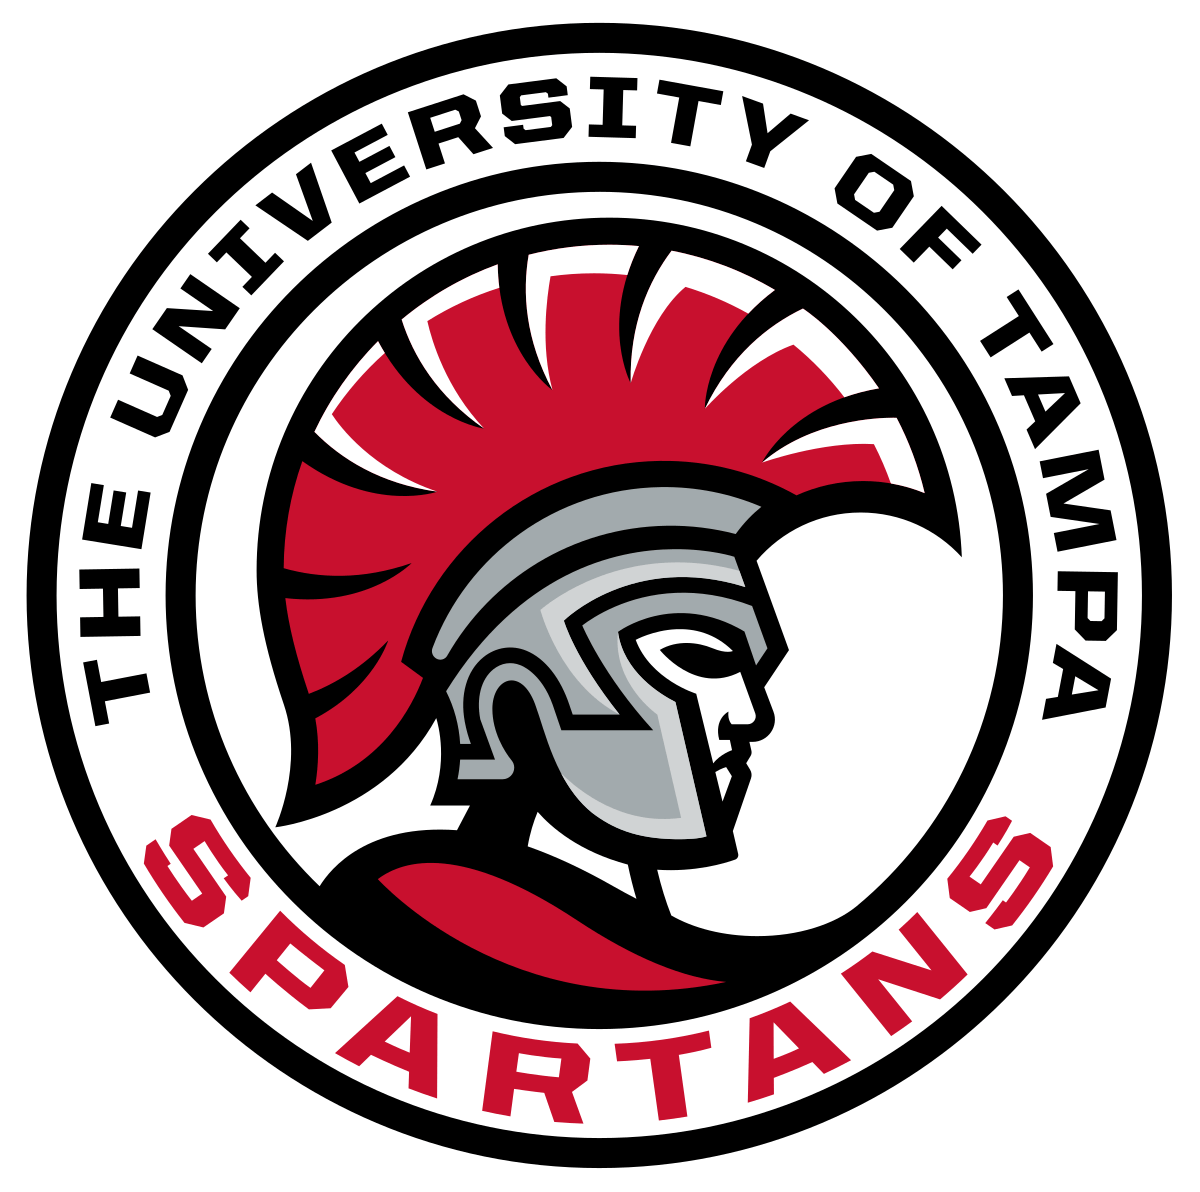 University of Tampa Logo - Tampa Spartans